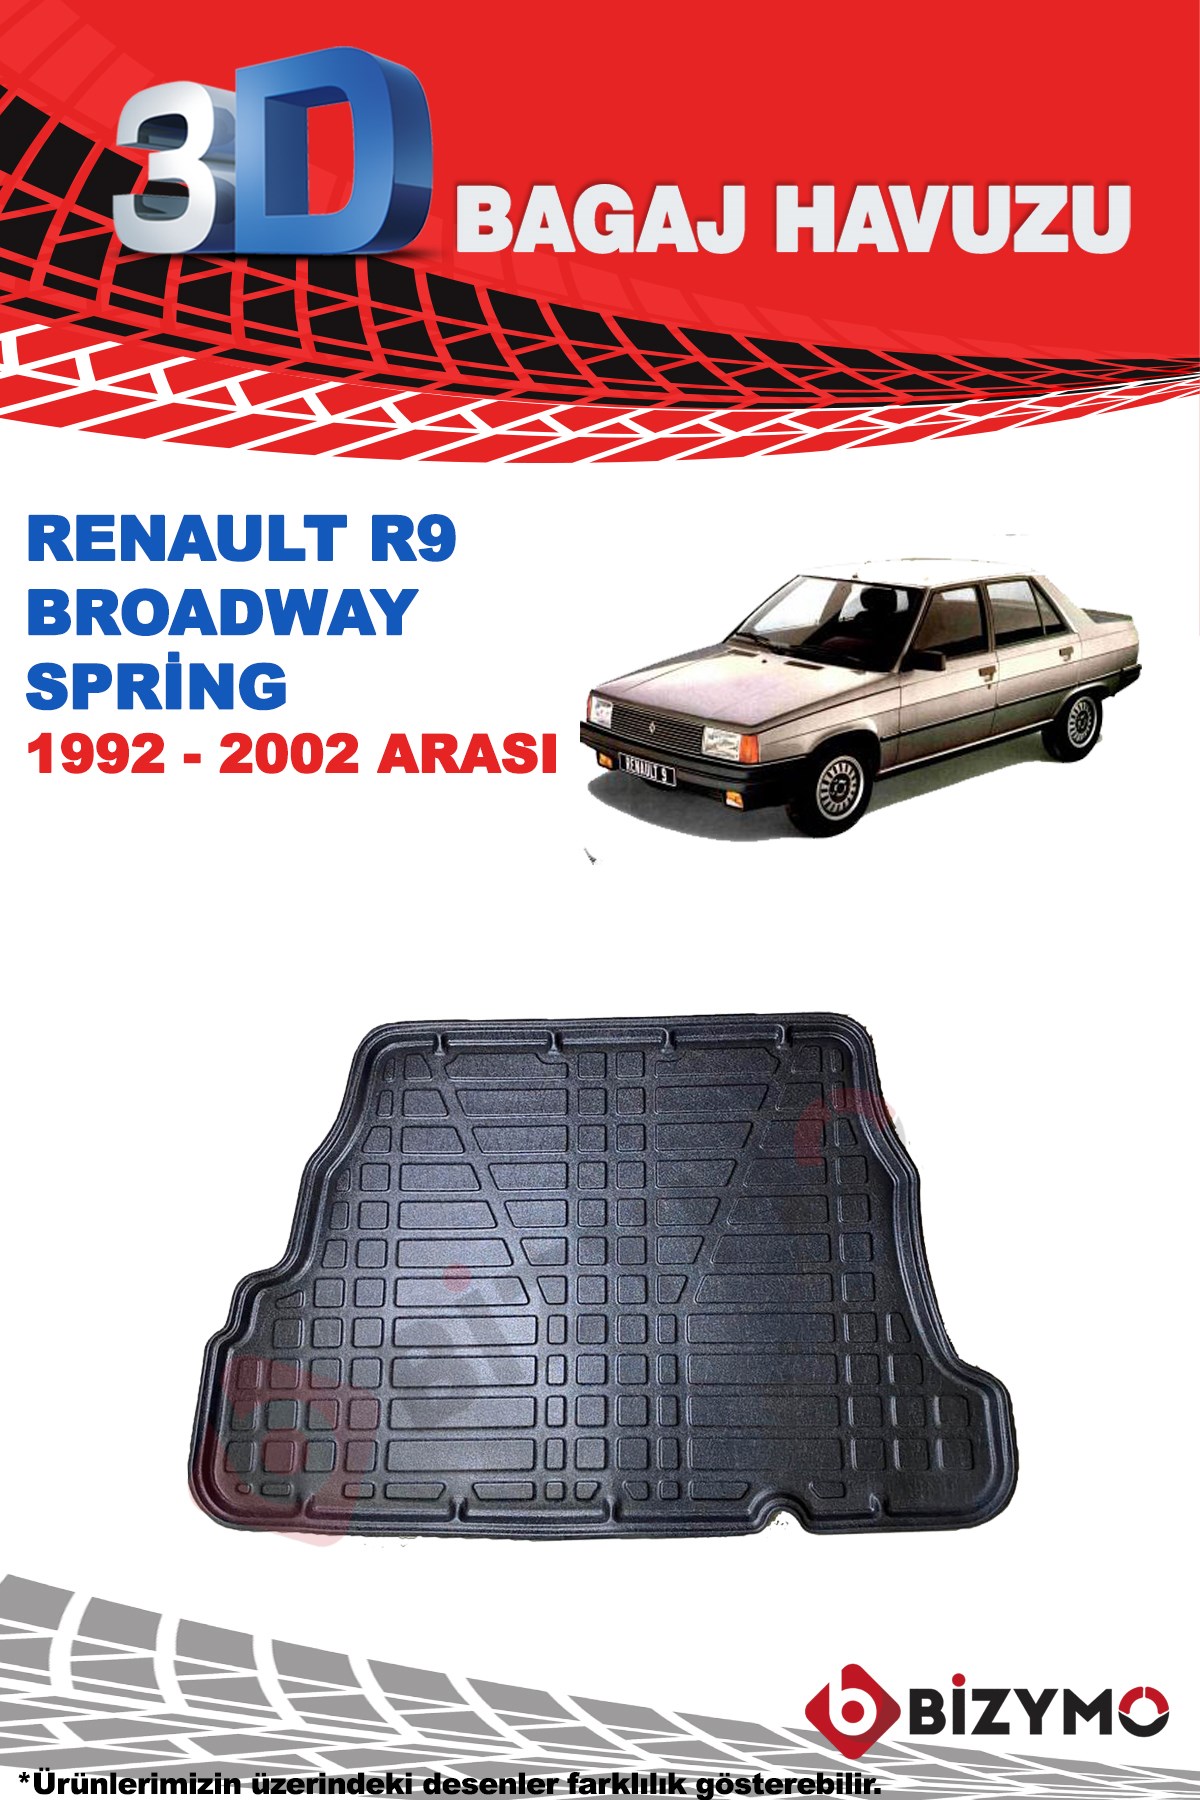 Renault R9 Sedan Broadway Fairway Spring 3D Bagaj Havuzu Bizymo - Bizim Oto